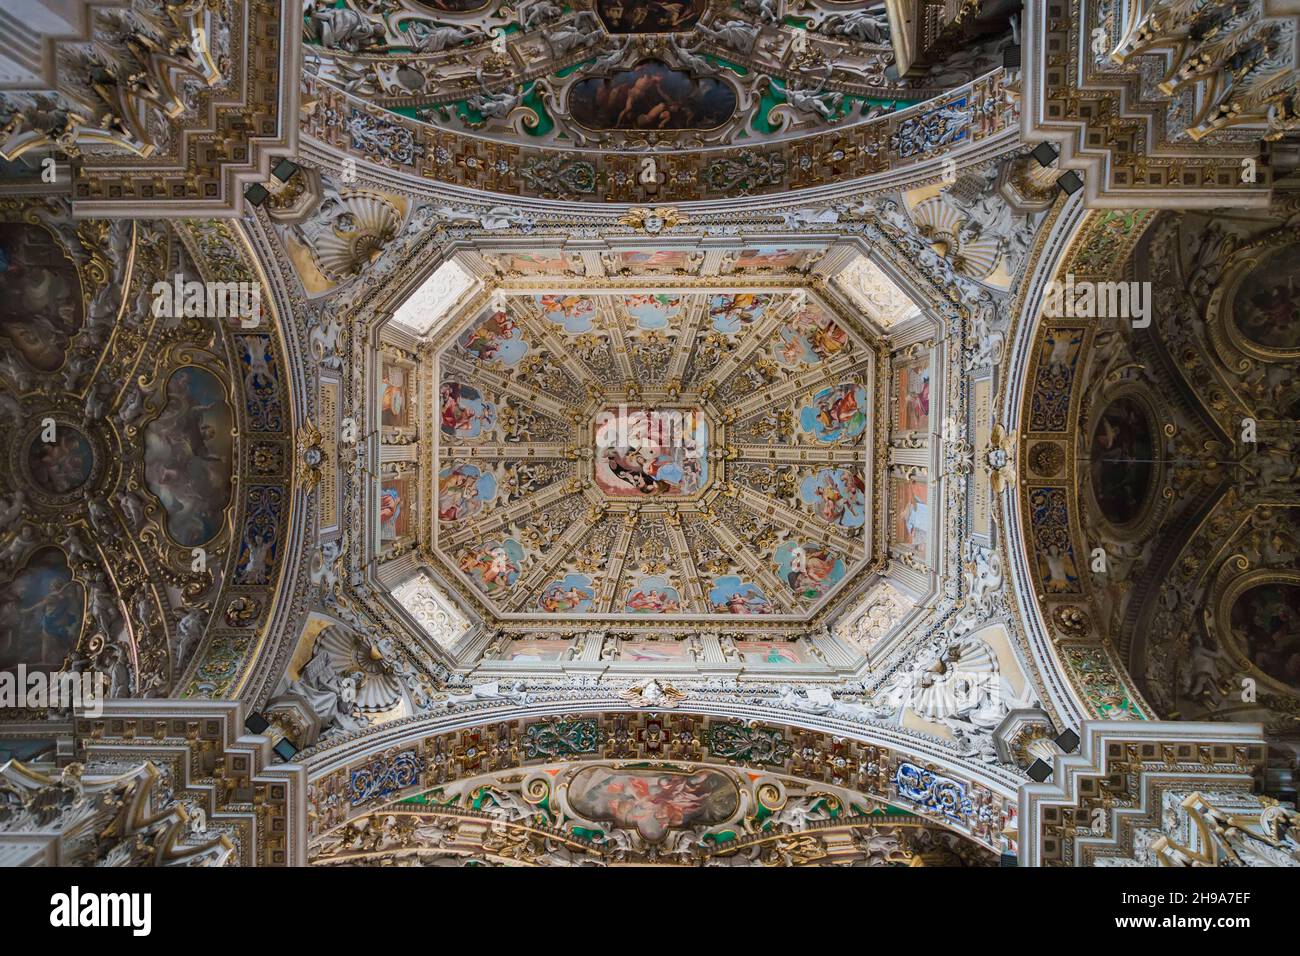 A rich decorative ceiling painting and stucco in the Basilica of Santa Maria Maggiore. Brescia. Italy. Stock Photo